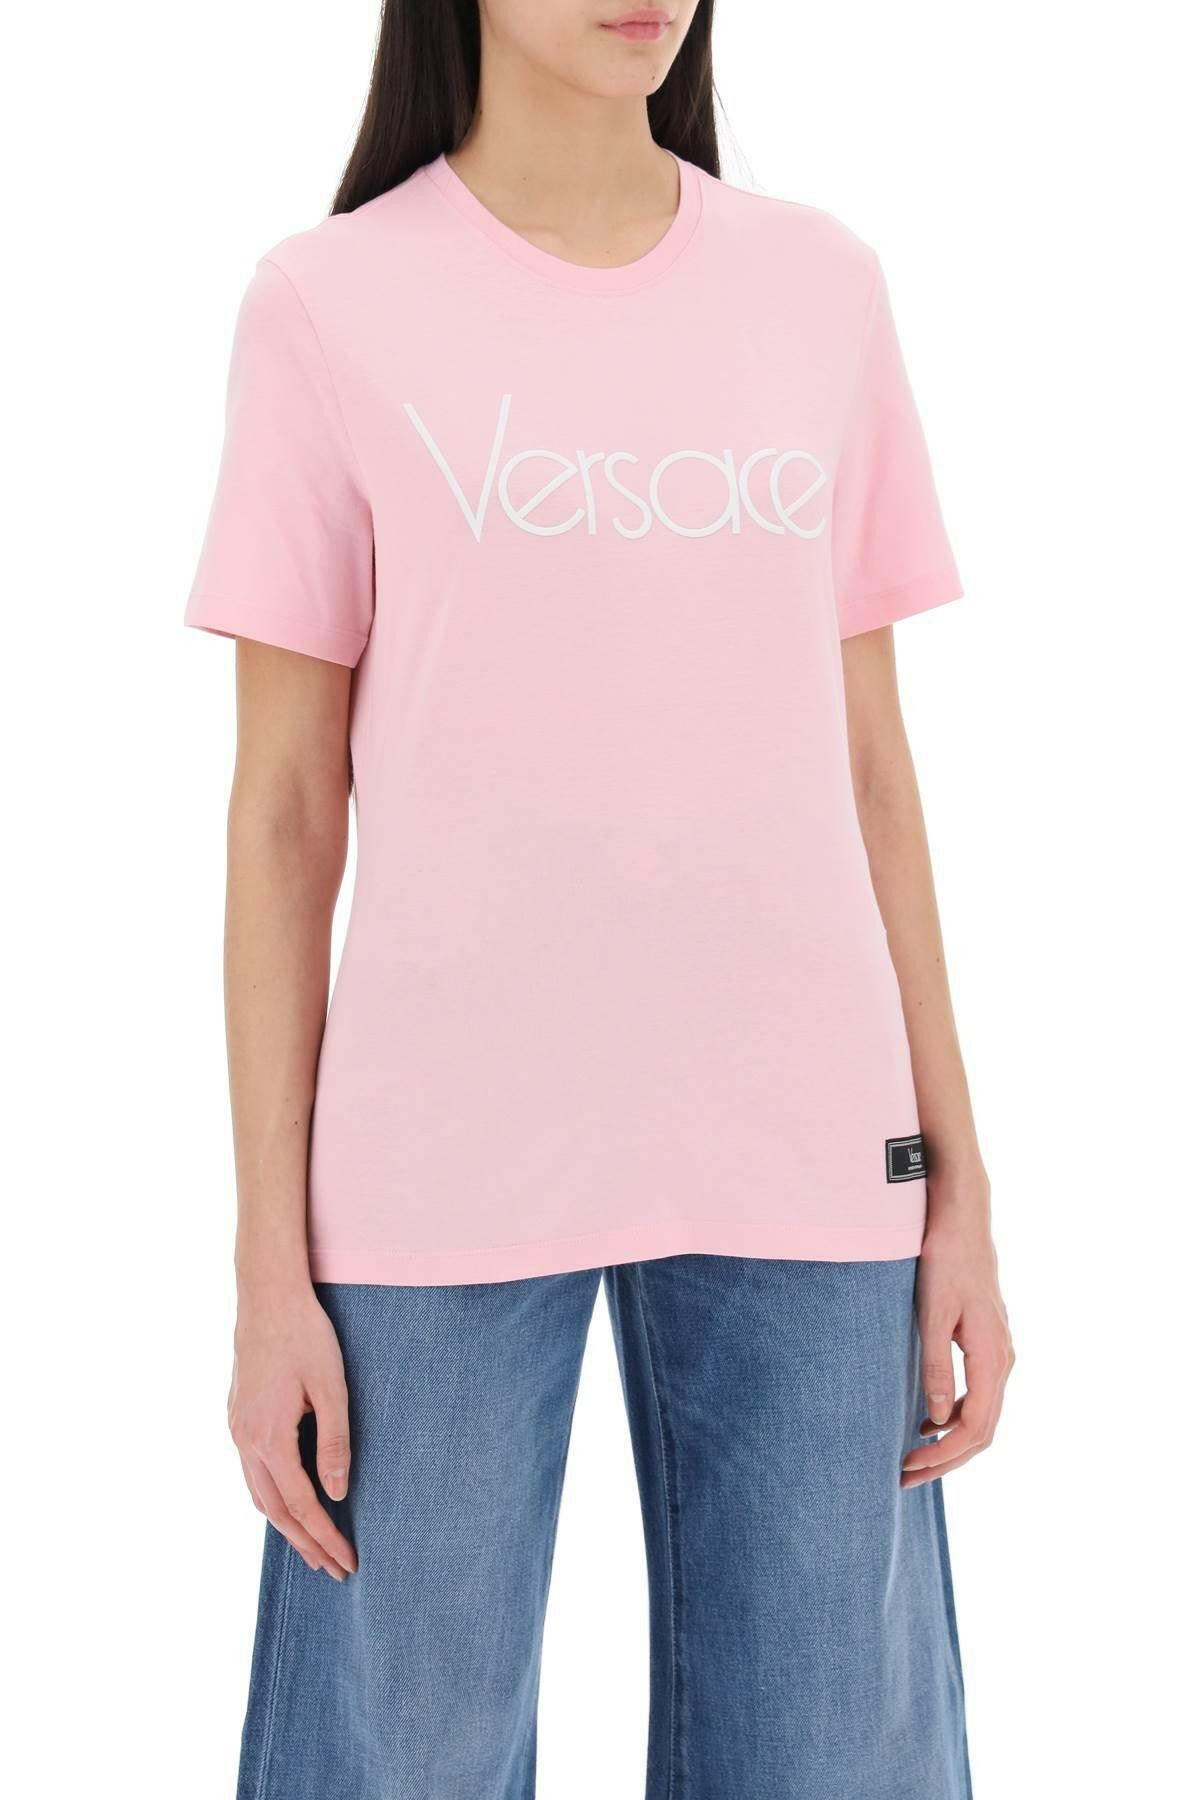 Versace Pink 1978 Re-Edition Cotton T-Shirt - JOHN JULIA